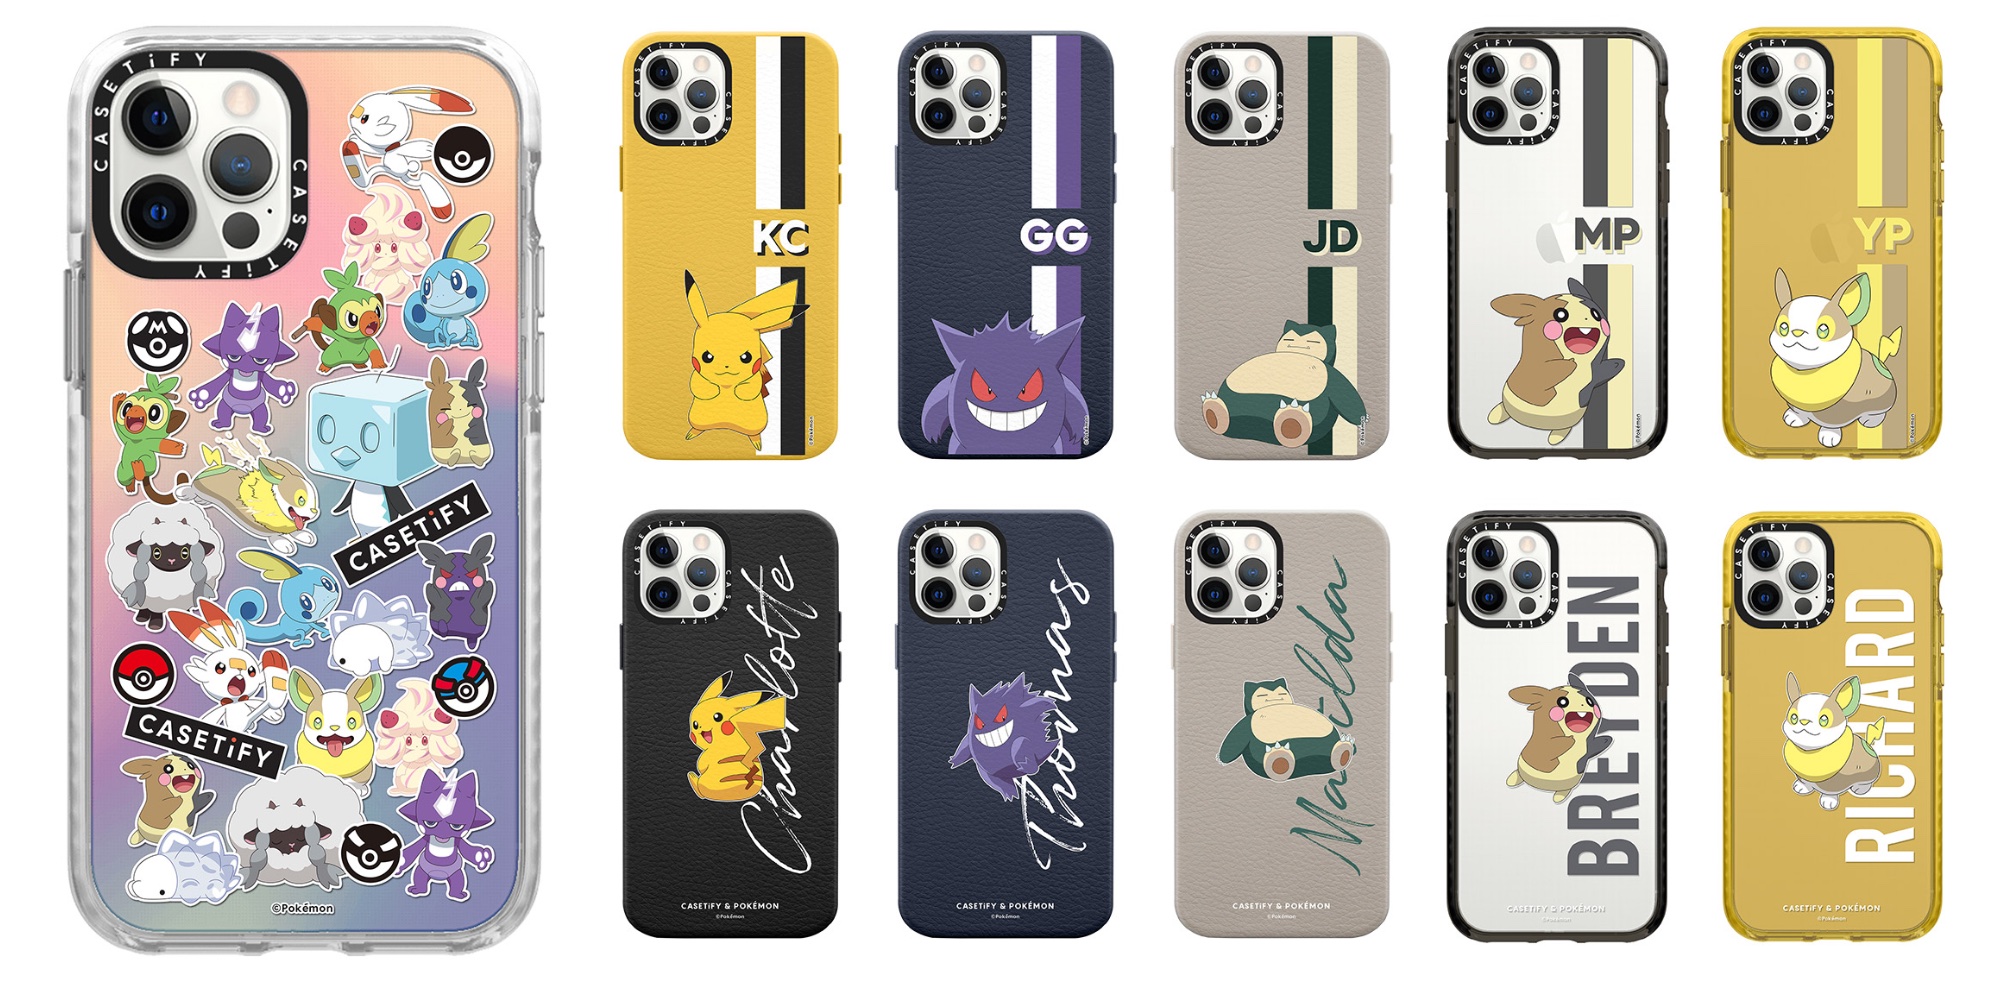 CASETiFY Pokémon iPhone 12 collaboration - 9to5Toys